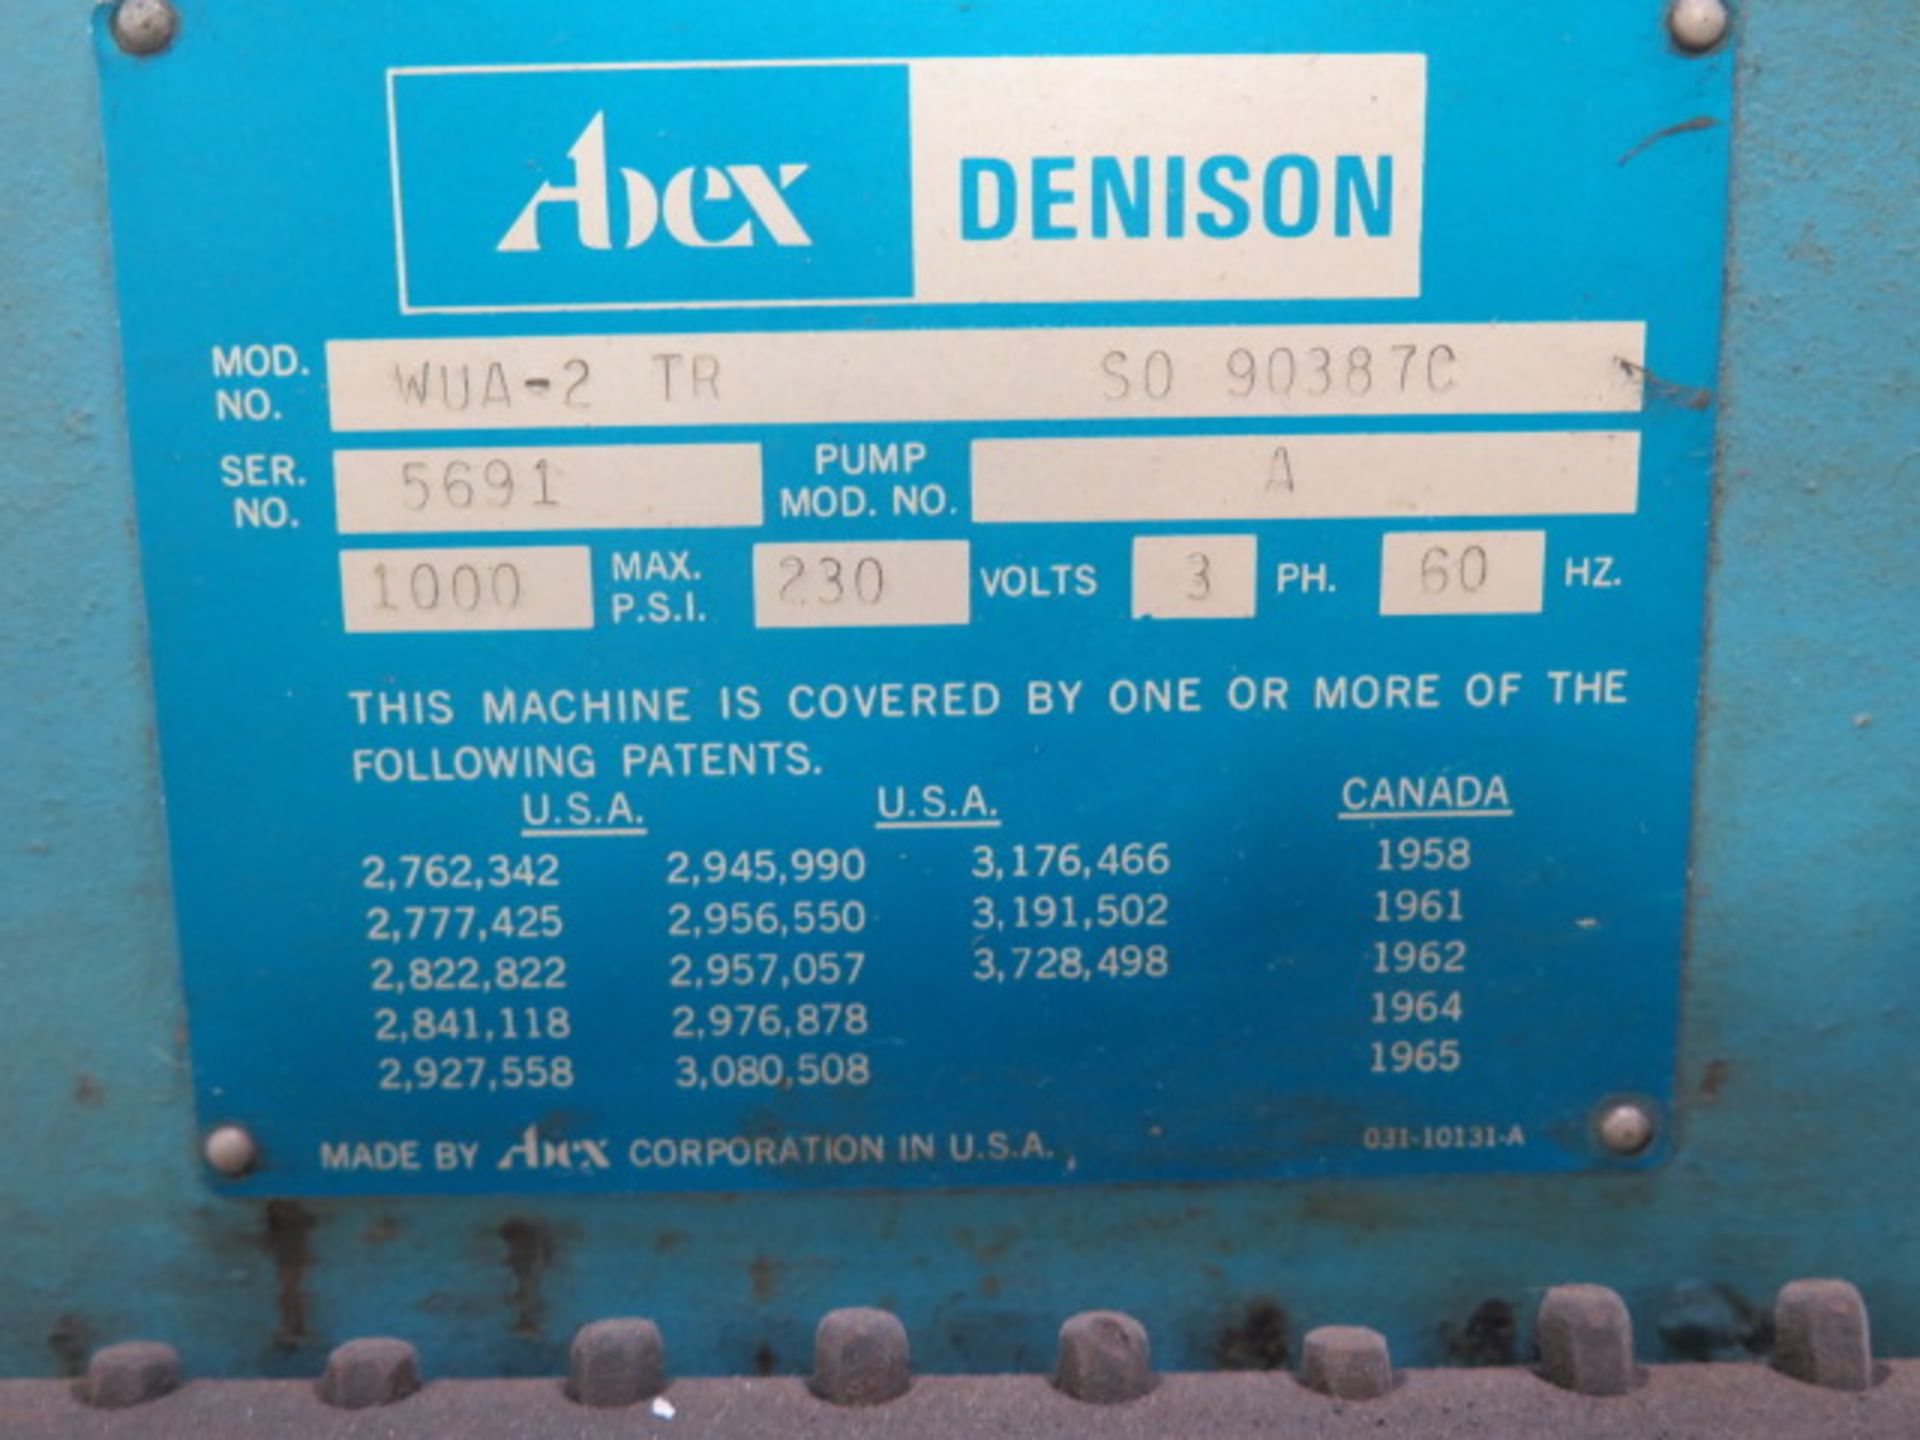 Abex / Denison Multipress mdl. WUA-2 TR 2-Ton Cap Hydraulic Press w/ Light Curtain - Image 6 of 6